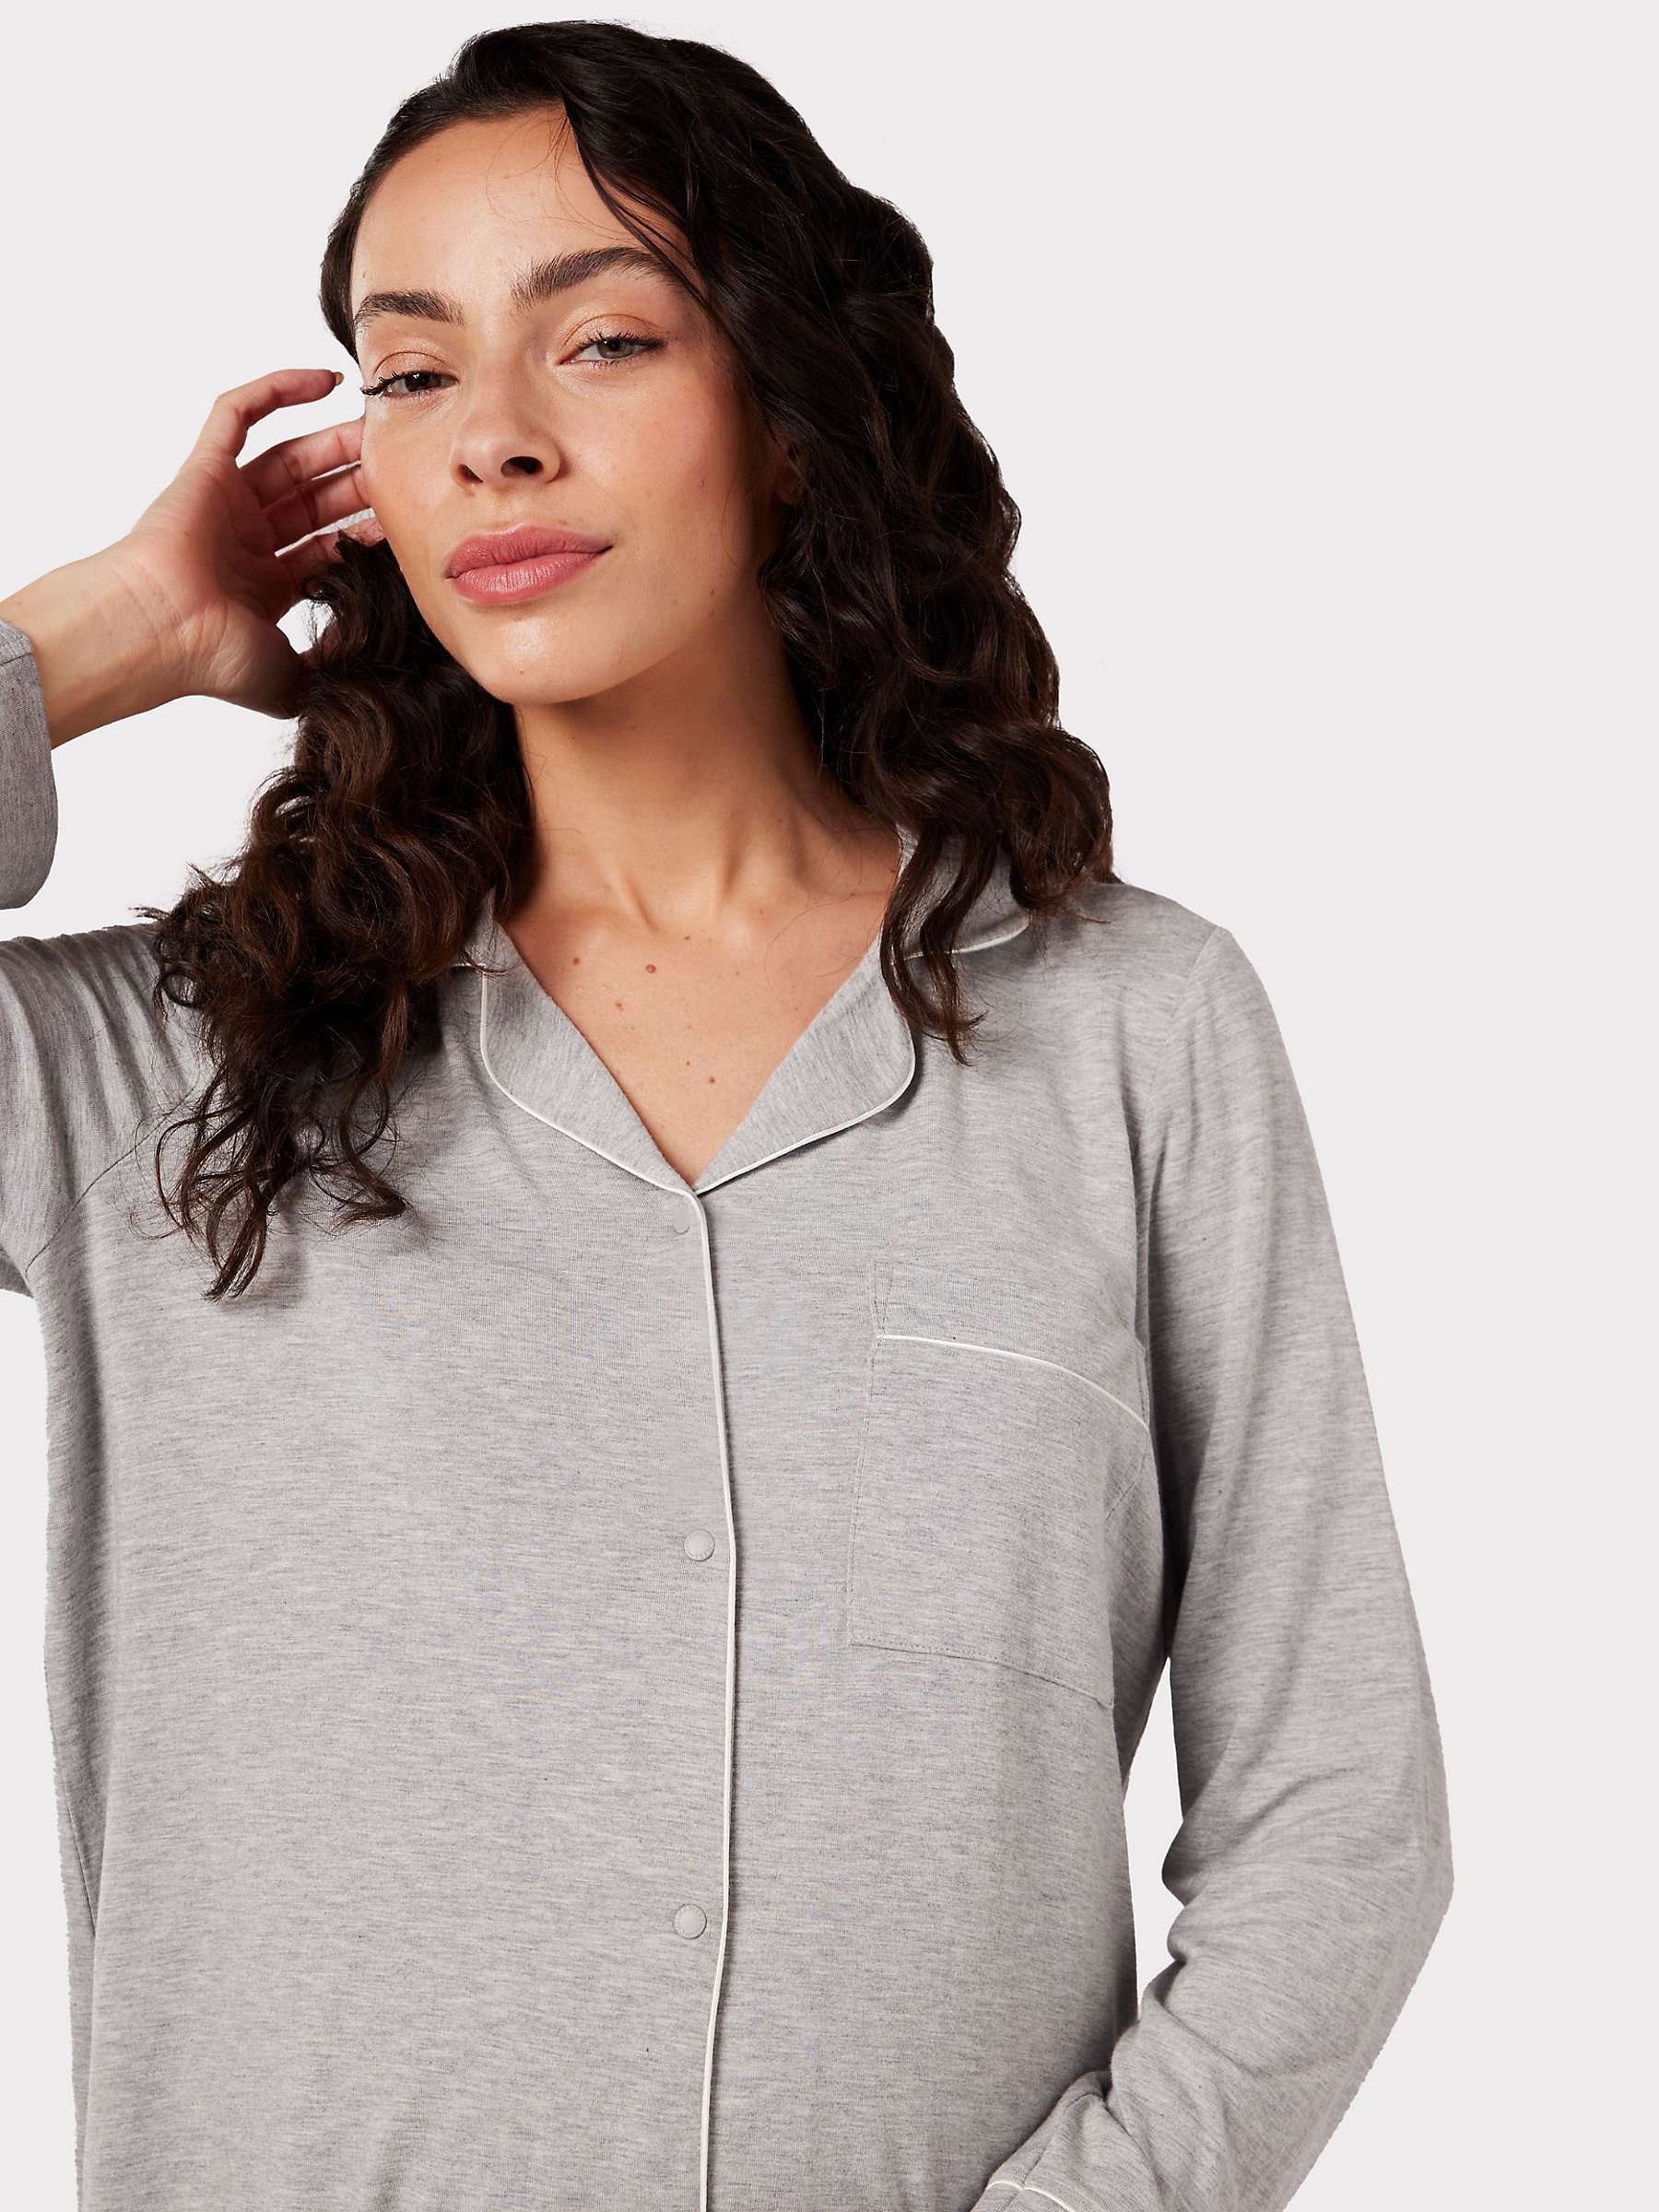 Buy Chelsea Peers Modal Long Shirt Maternity Pyjama Set, Grey Online at johnlewis.com